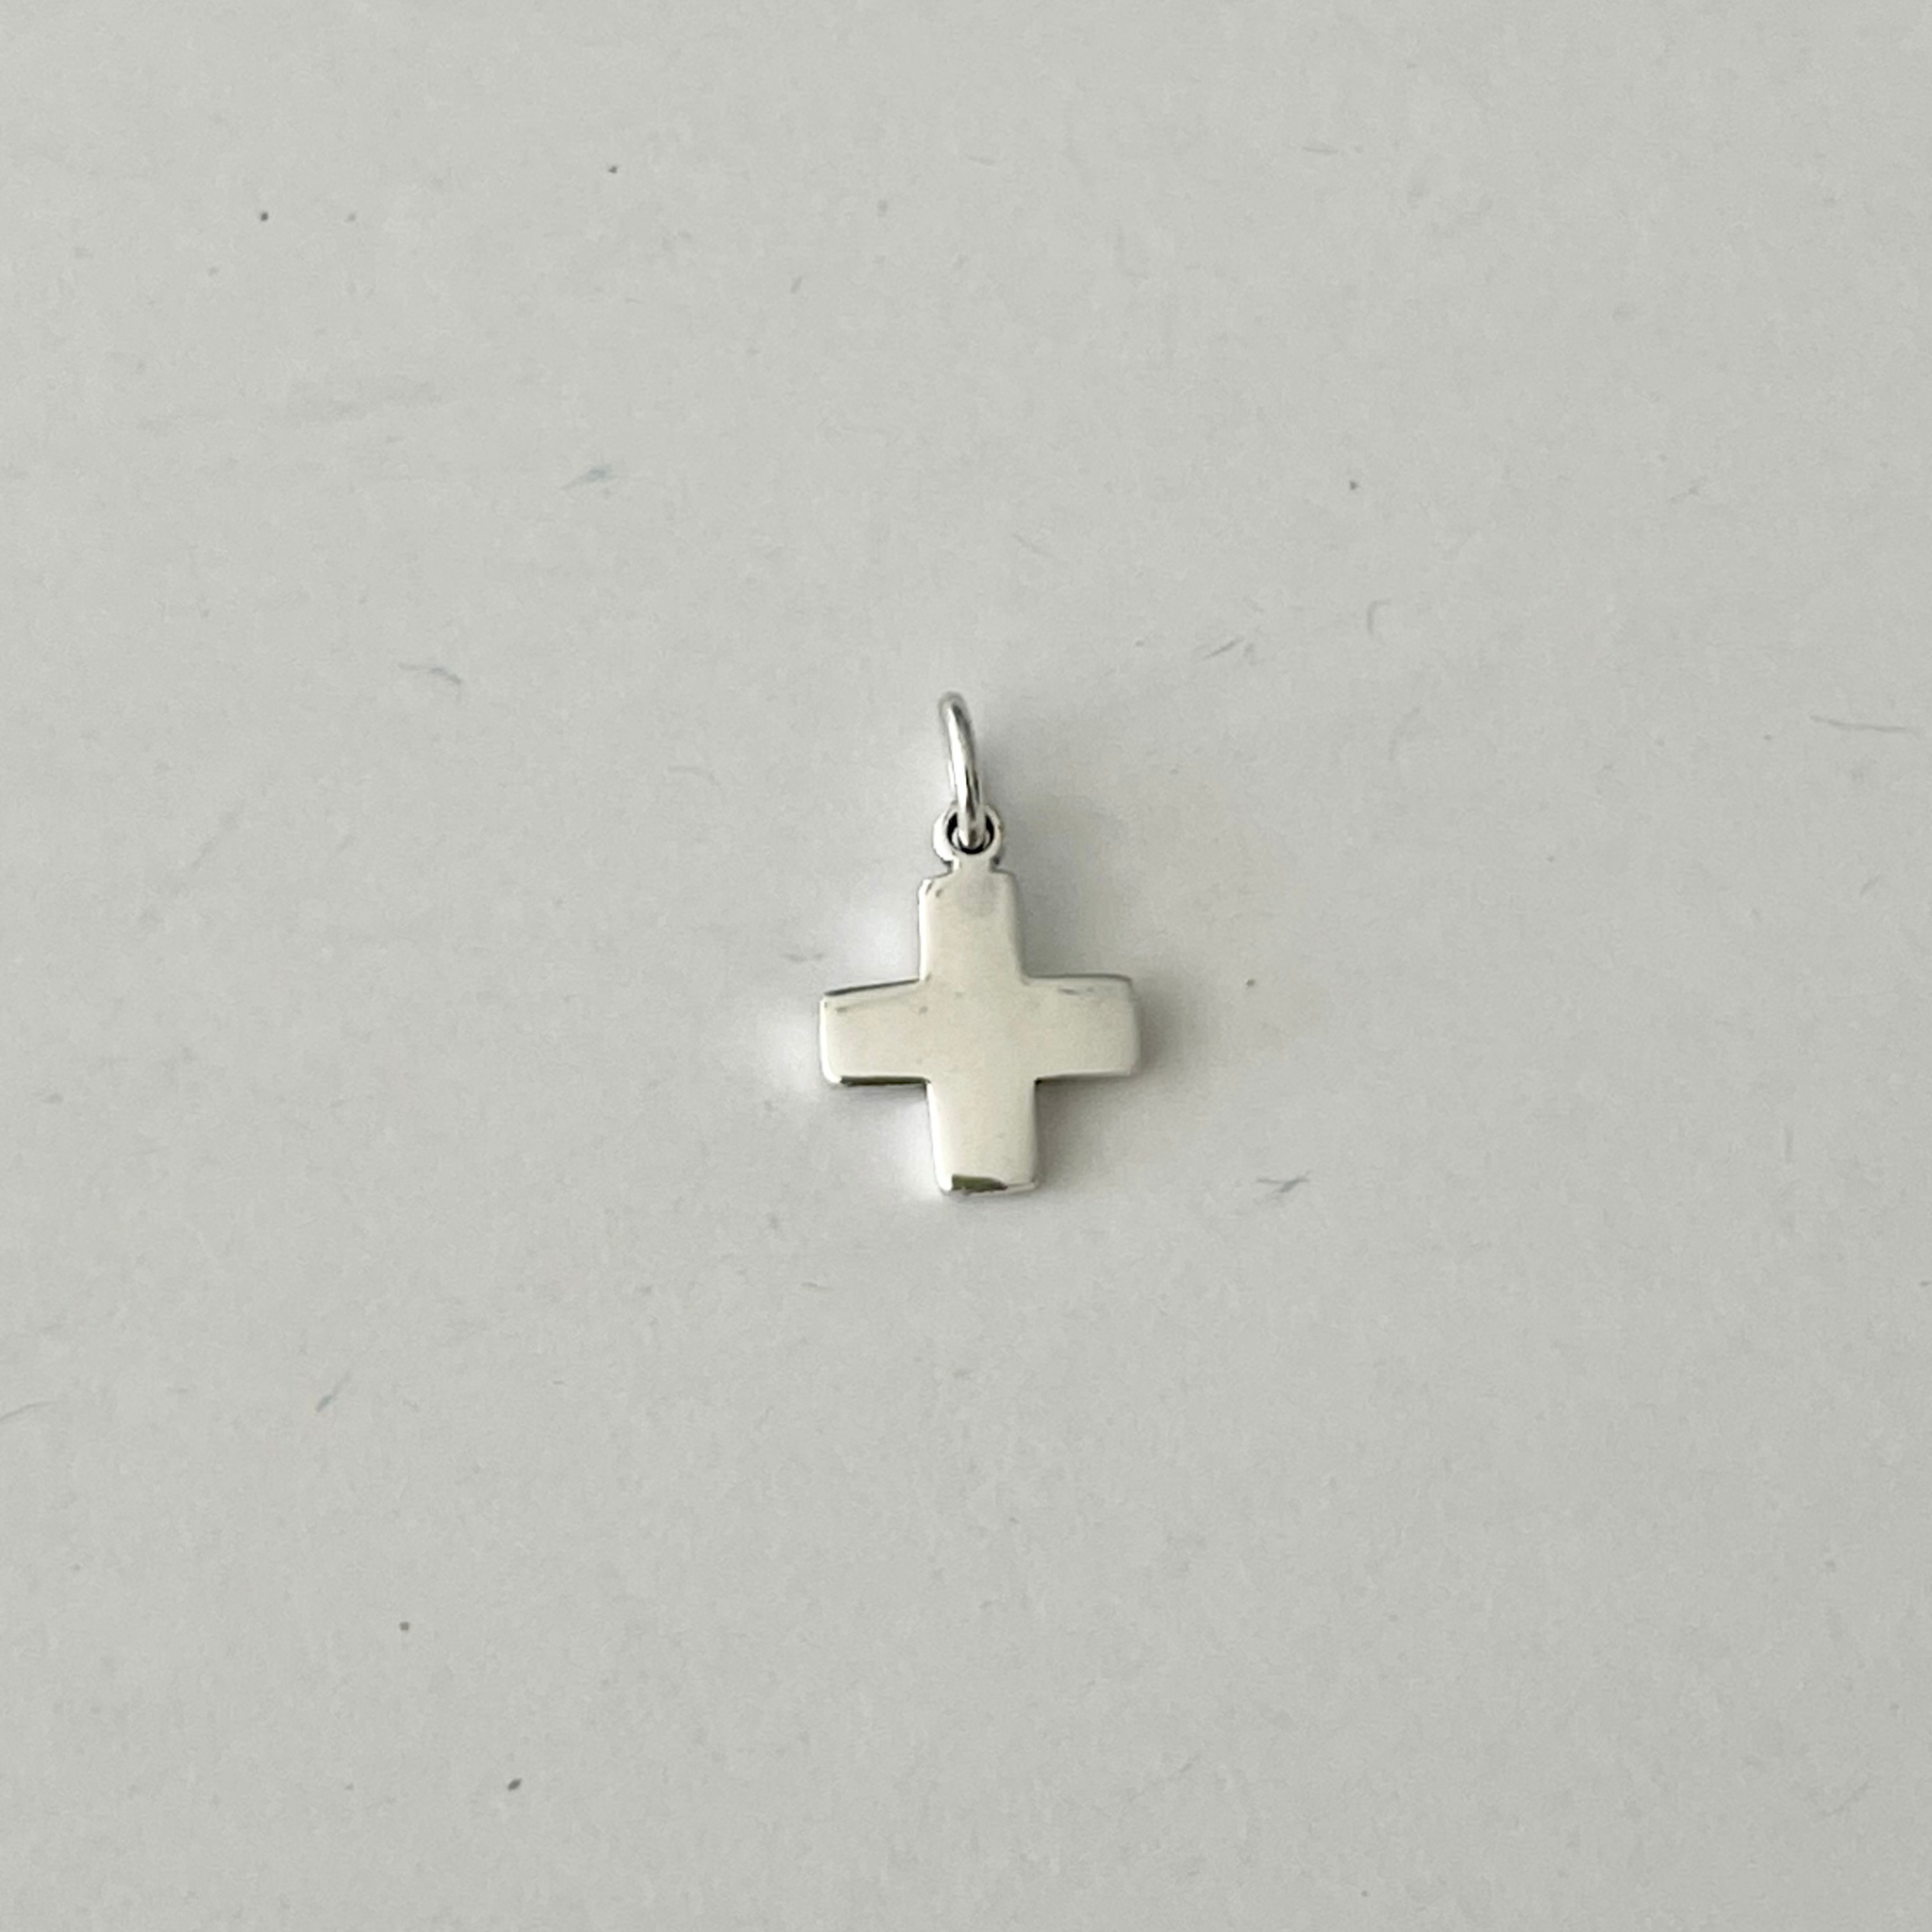  Silver Small Crosses Mini Cross Charms Variety Cross Beads for  Bracelets Craft 1 Inch Cross Charm Bulk Cross Pendant Jewelry Making (60pcs  Brass Thin Cross) : Arts, Crafts & Sewing